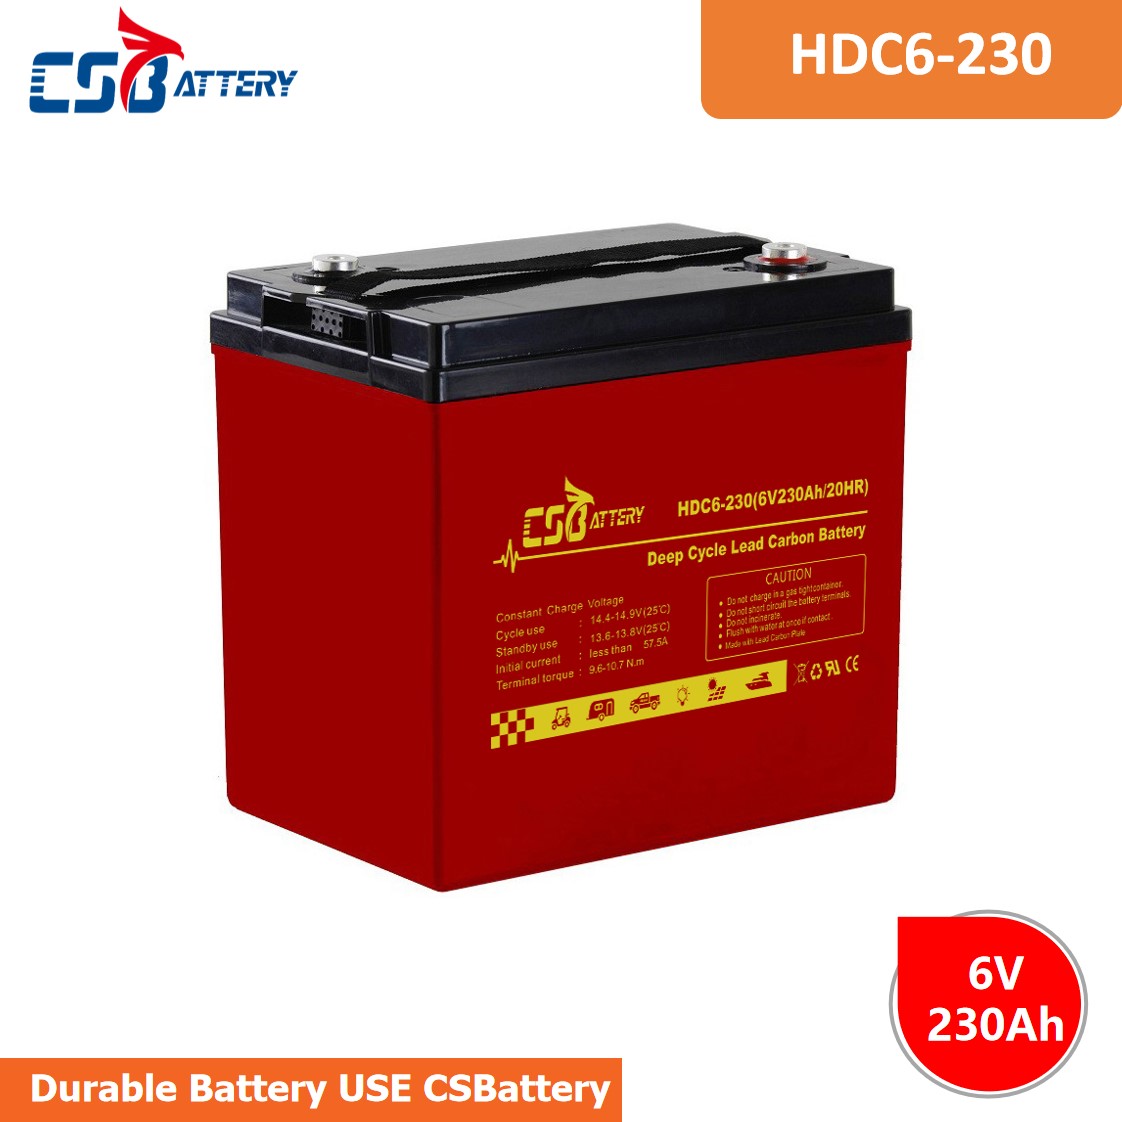 HDC6-230 6V 230Ah Fast-C Lead Carbon Battery